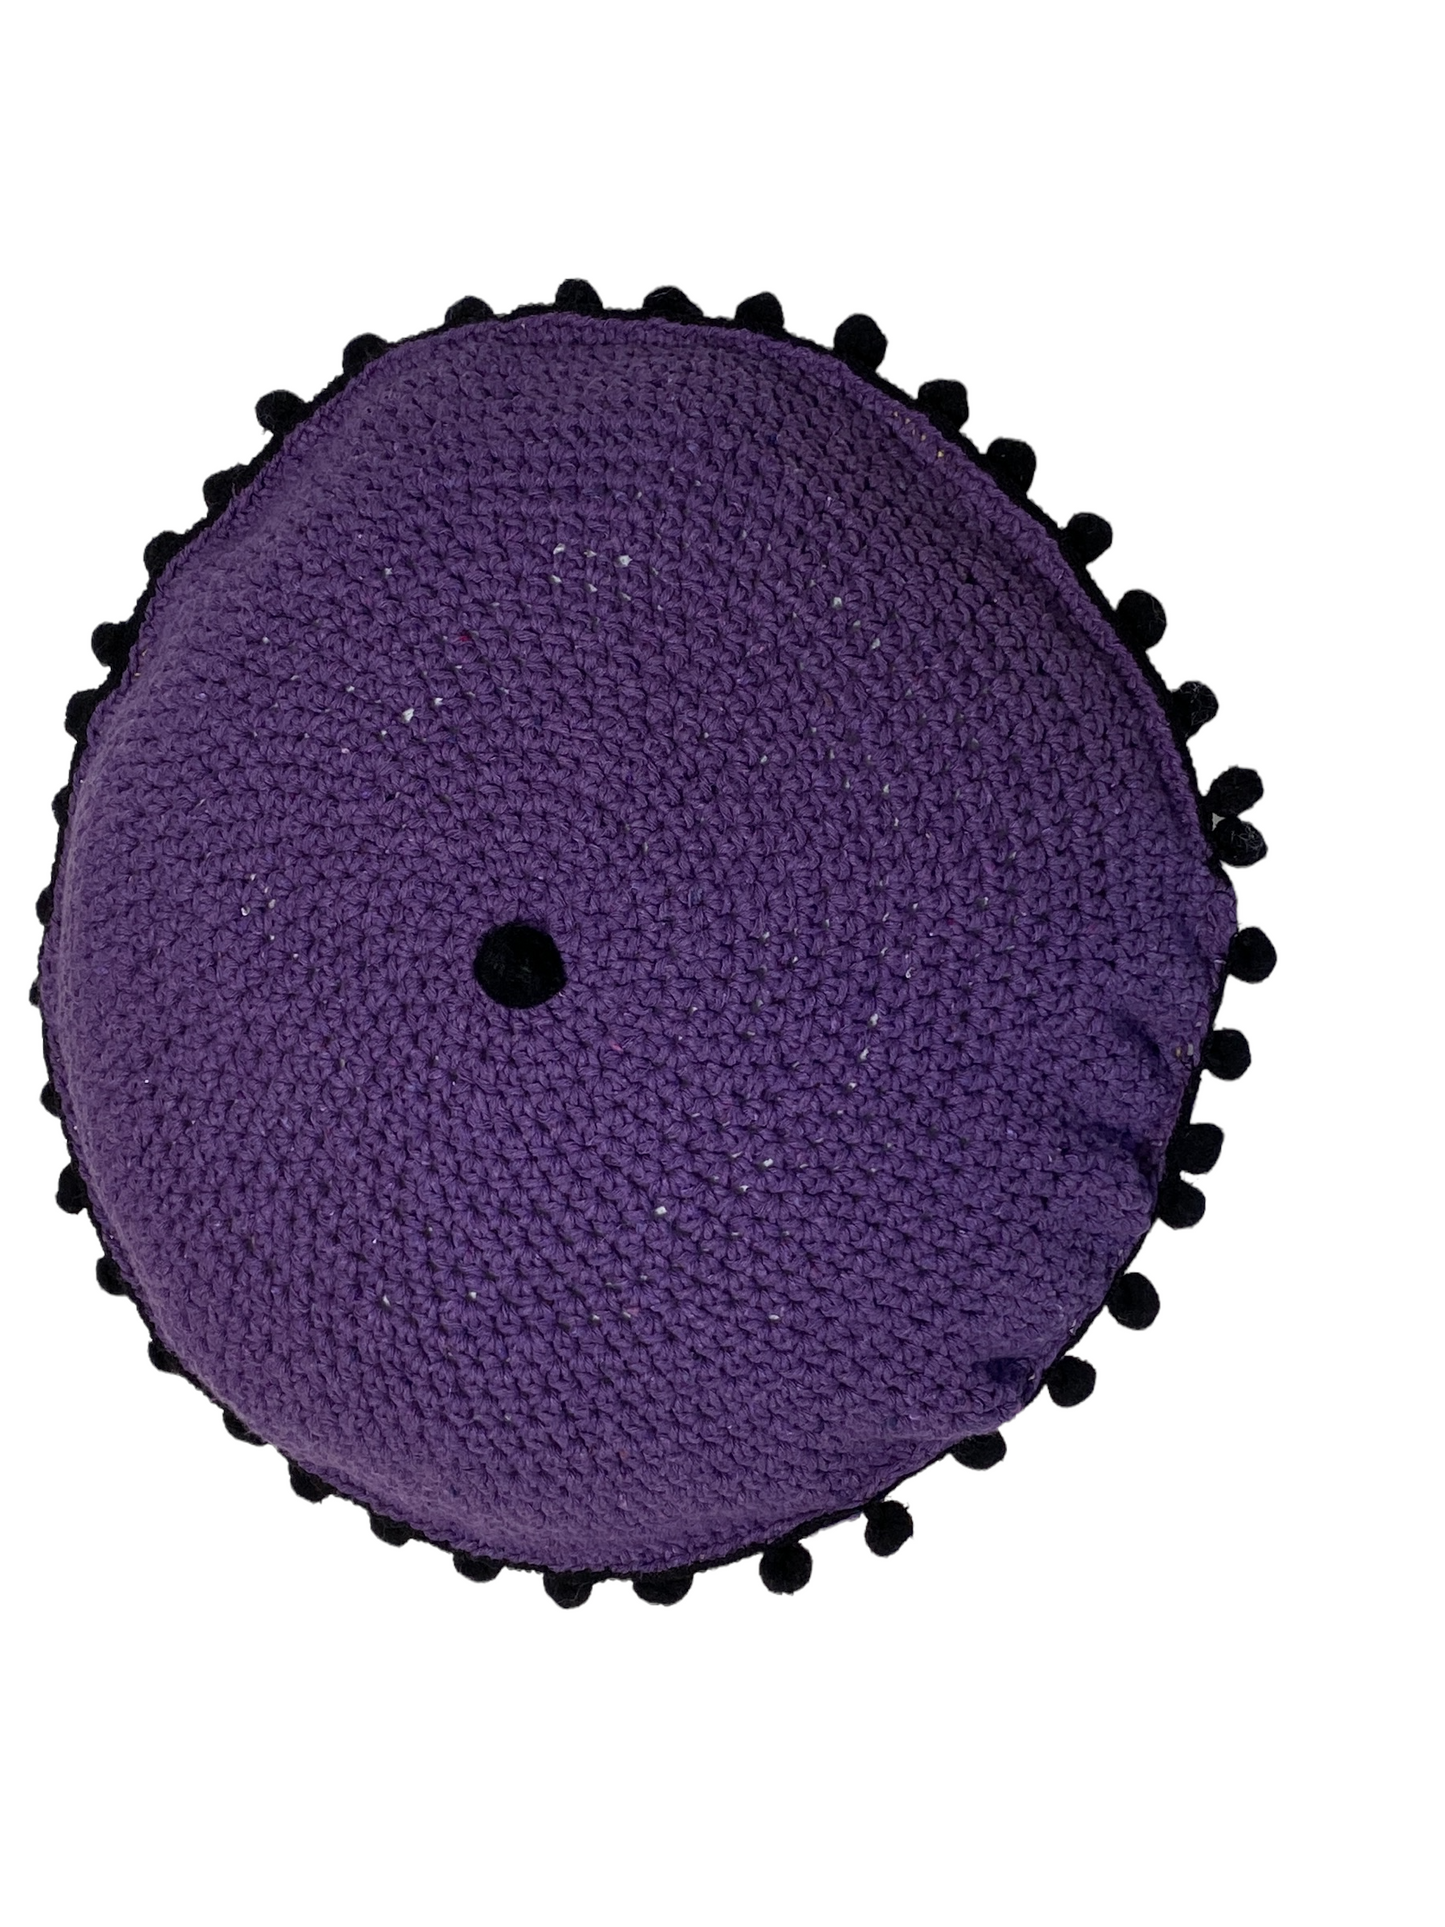 #4719 Handmade Round Crochet Pillow With Decorative Tassels